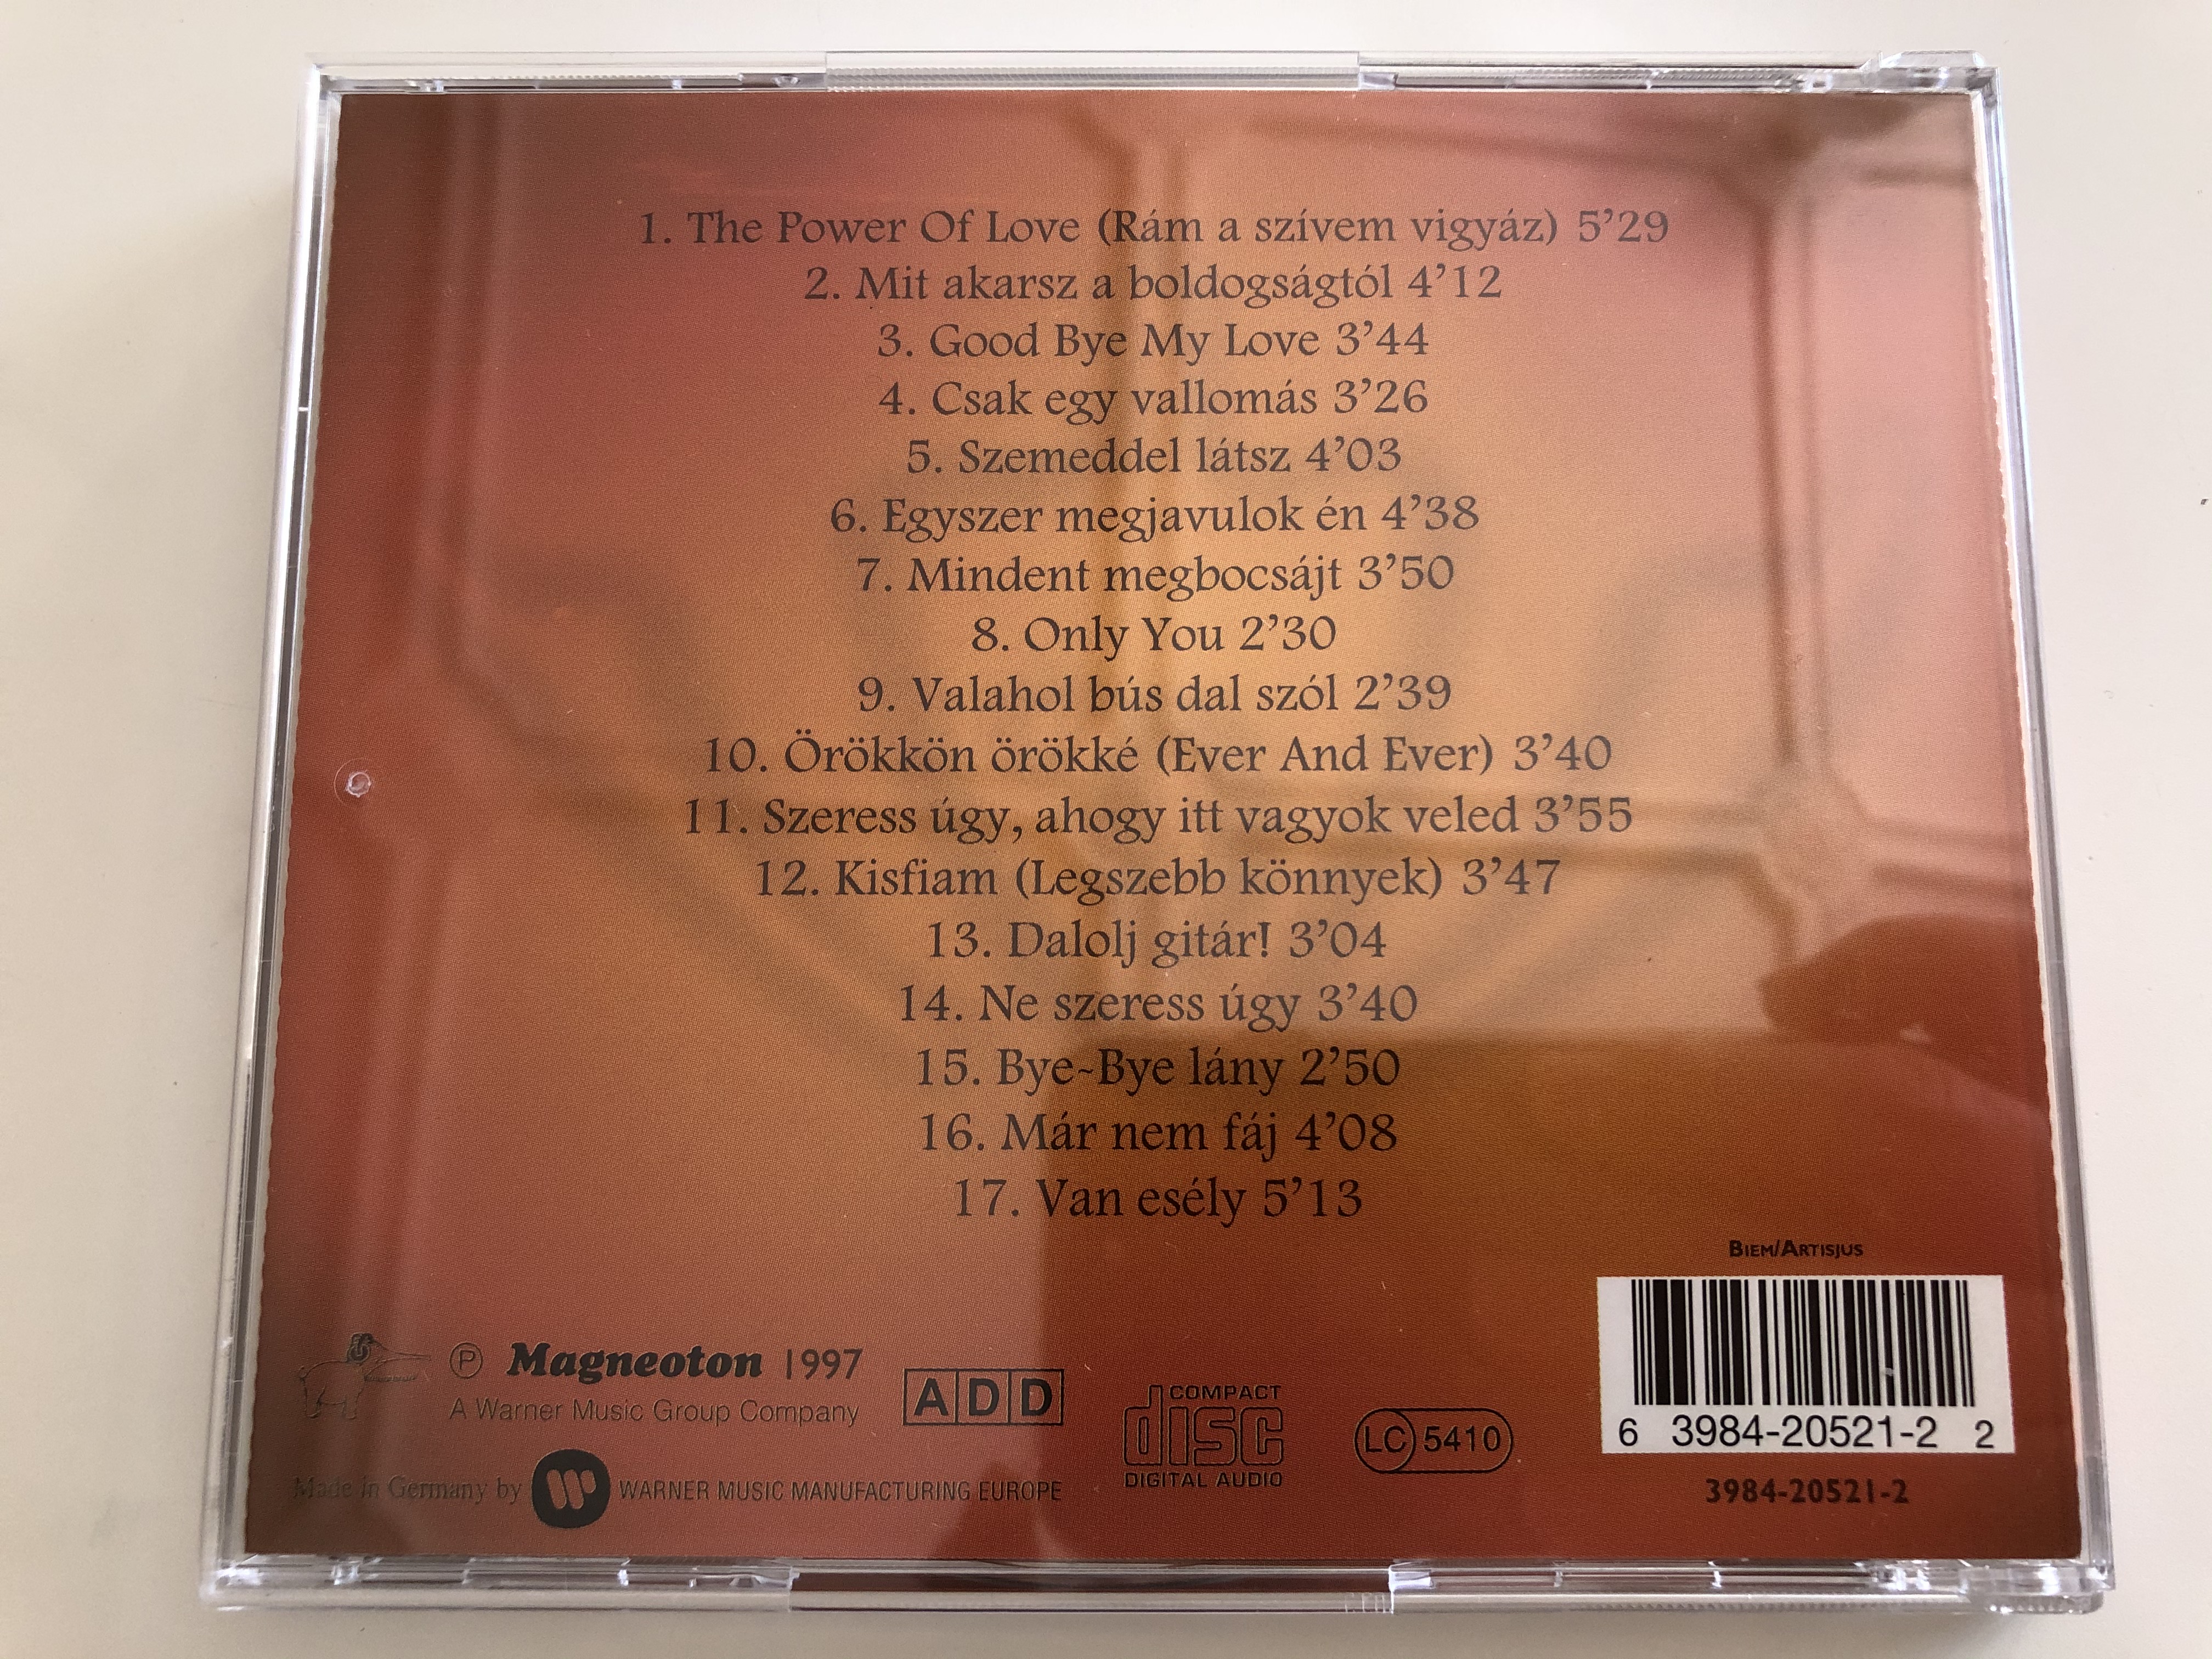 z-mb-jimmy-best-of-1-legsikeresebb-dalai-2-uj-dal-magneoton-audio-cd-1997-3984-20521-2-8-.jpg